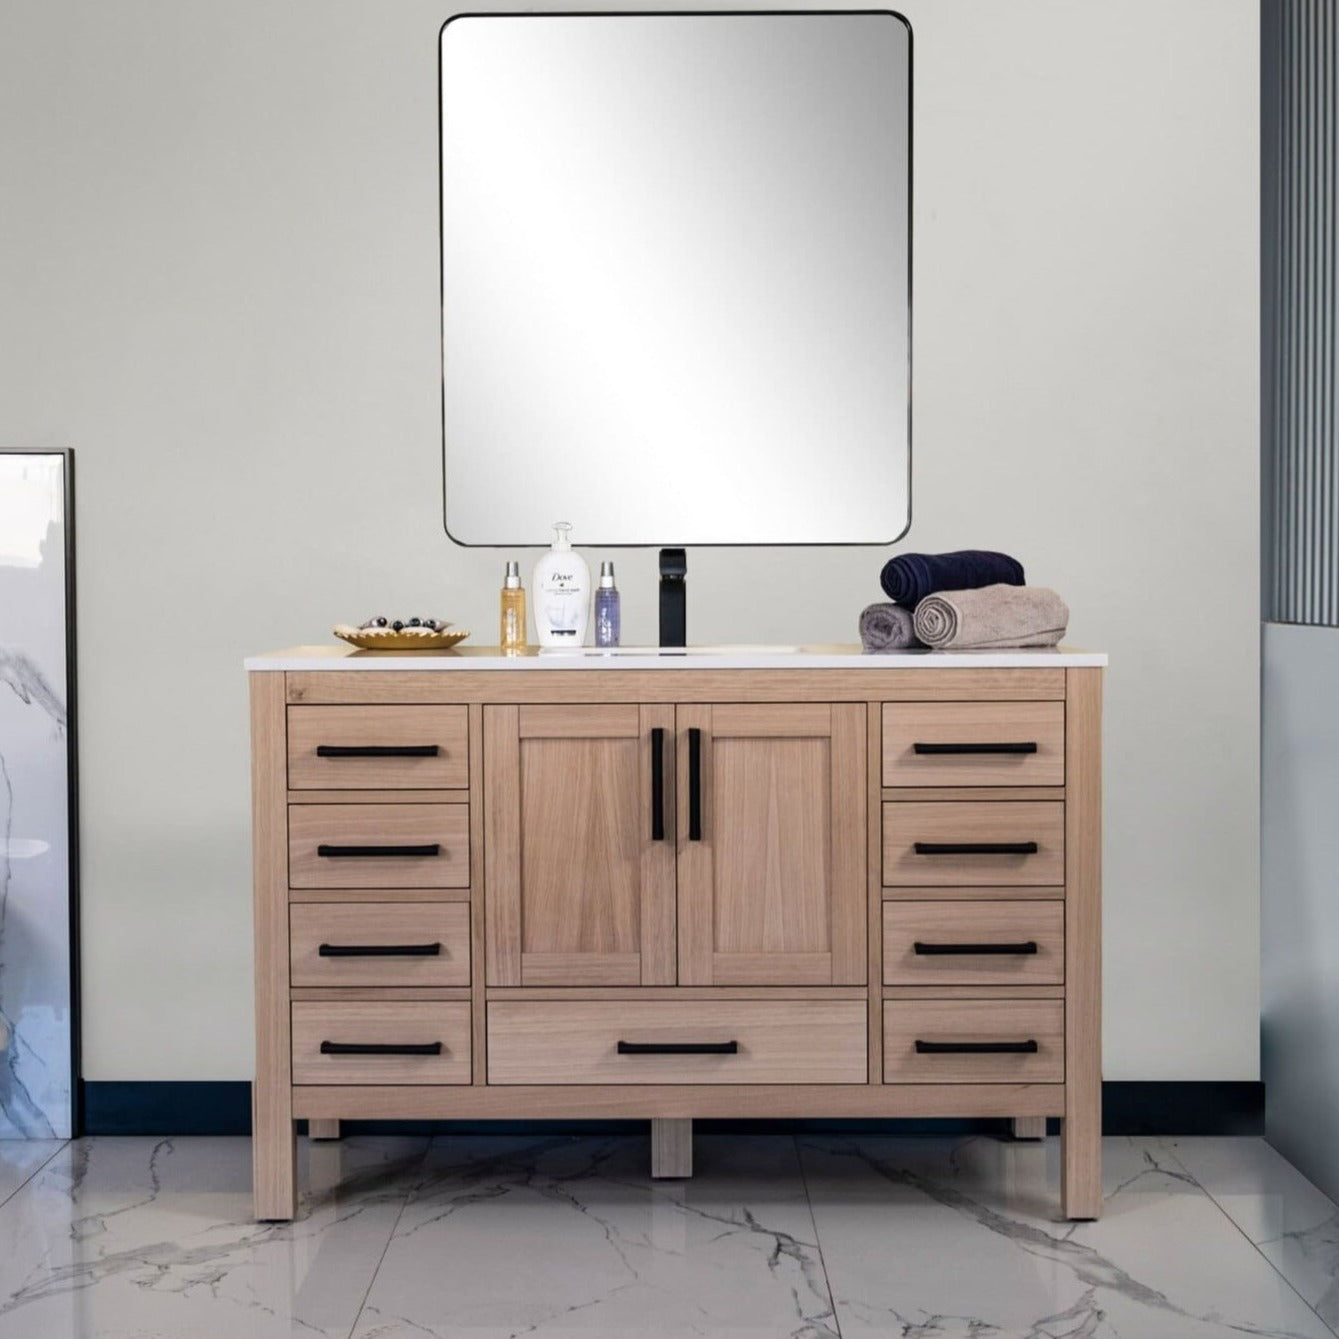 Ahley Bathroom Vanity Homelero 48"  #size_48"  #color_natural oak #hardware_brass